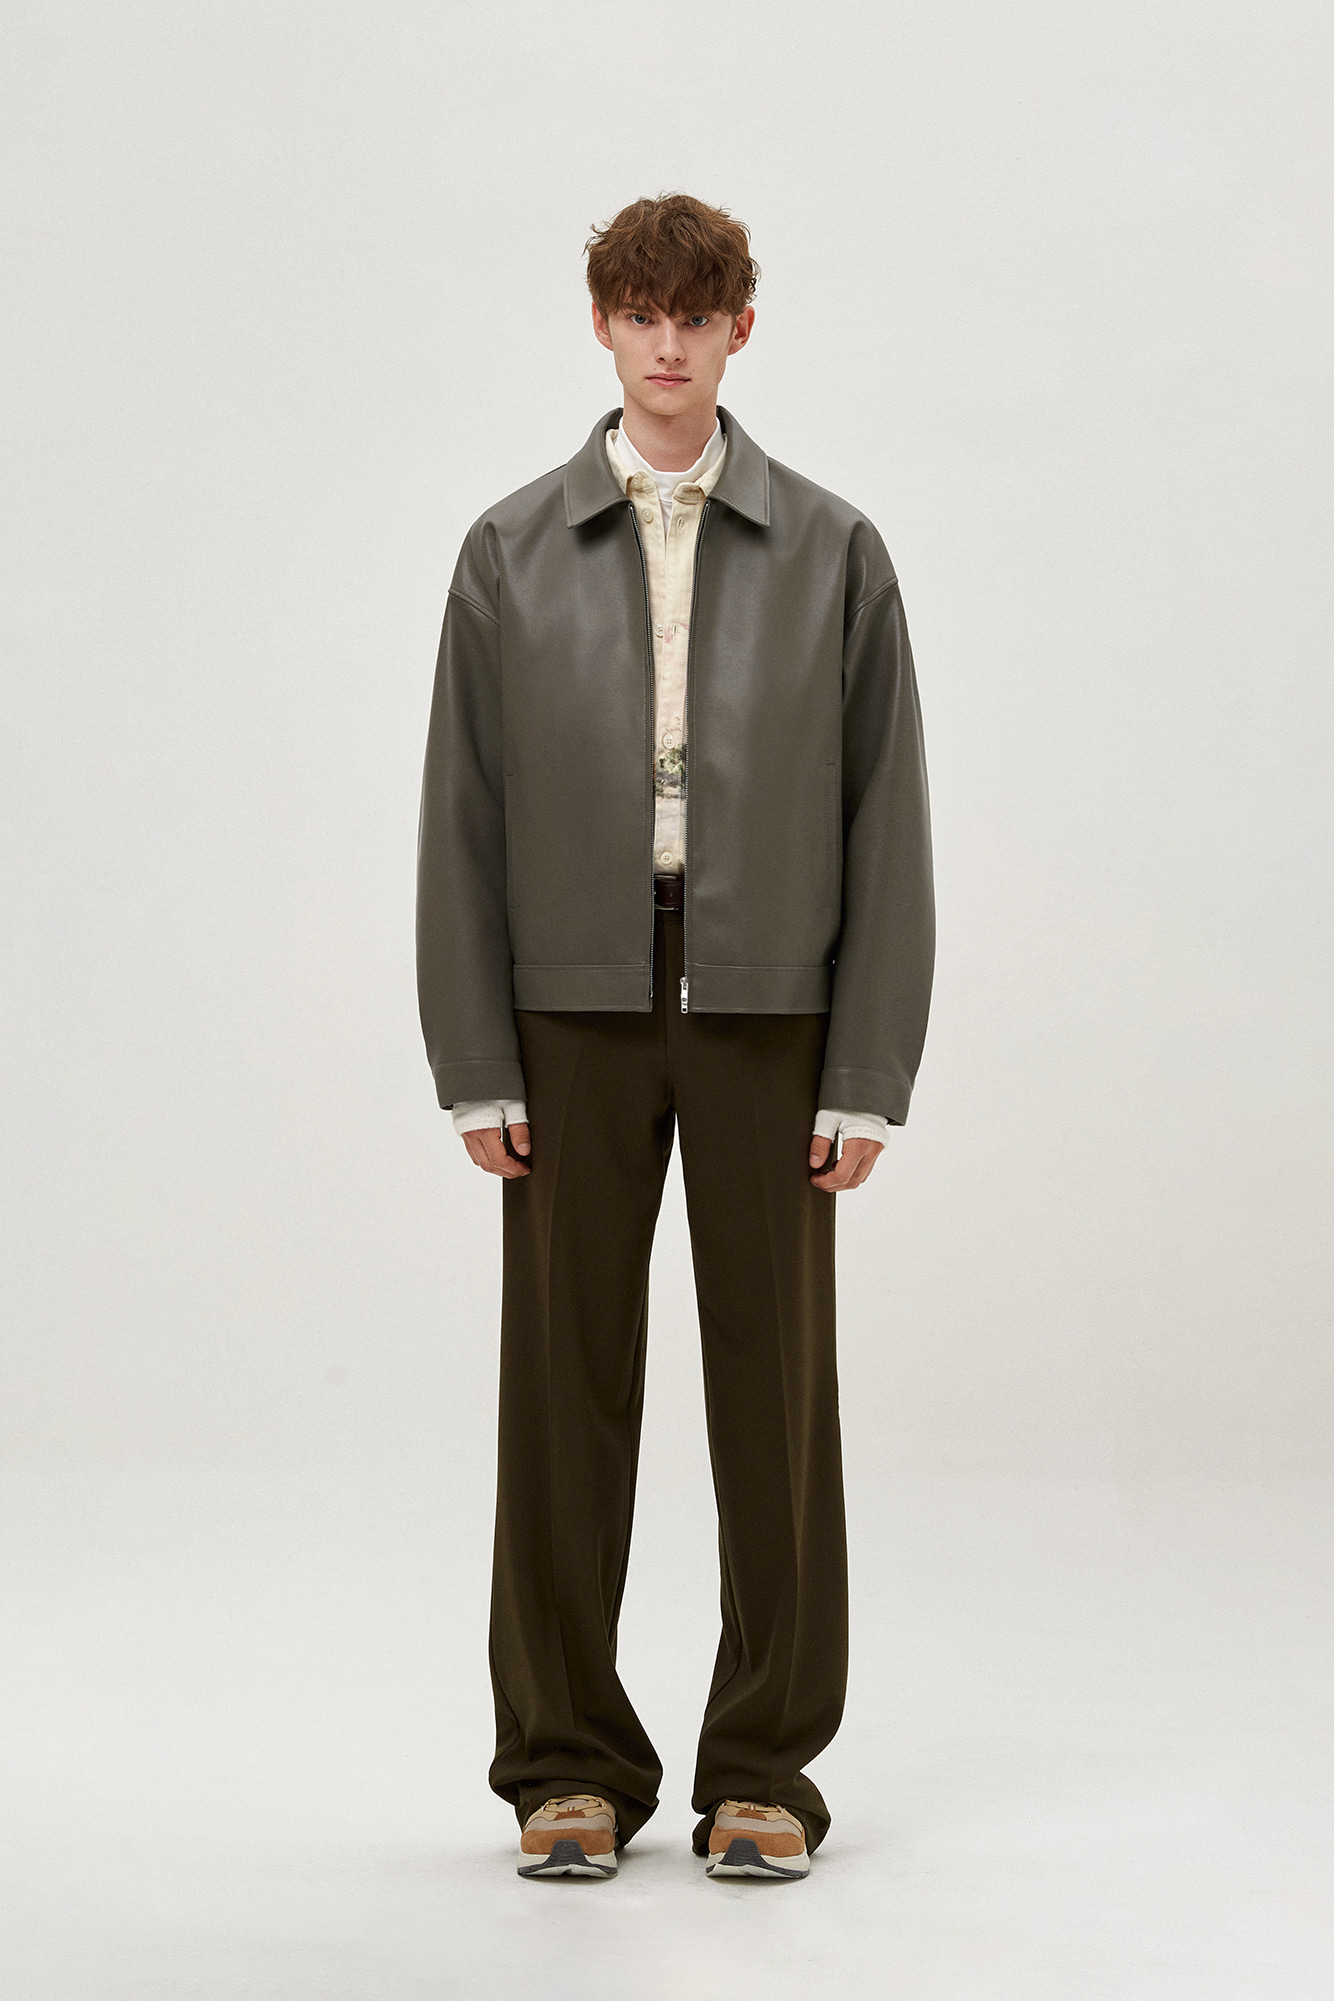 Overfit vegan leather single jacket (khaki grey)